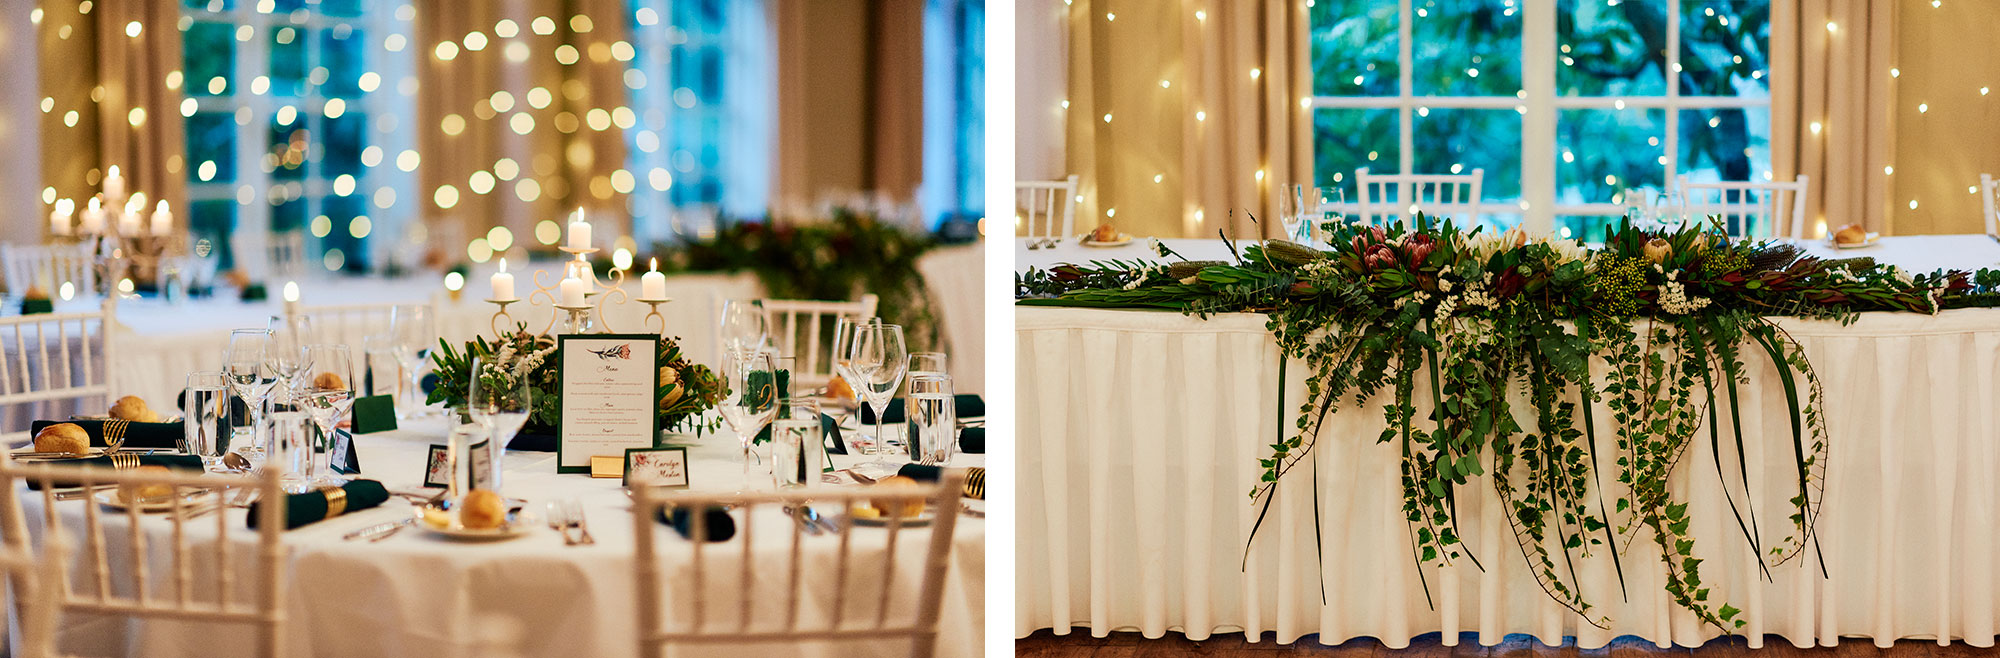 table settings at Milton Park Wedding Reception